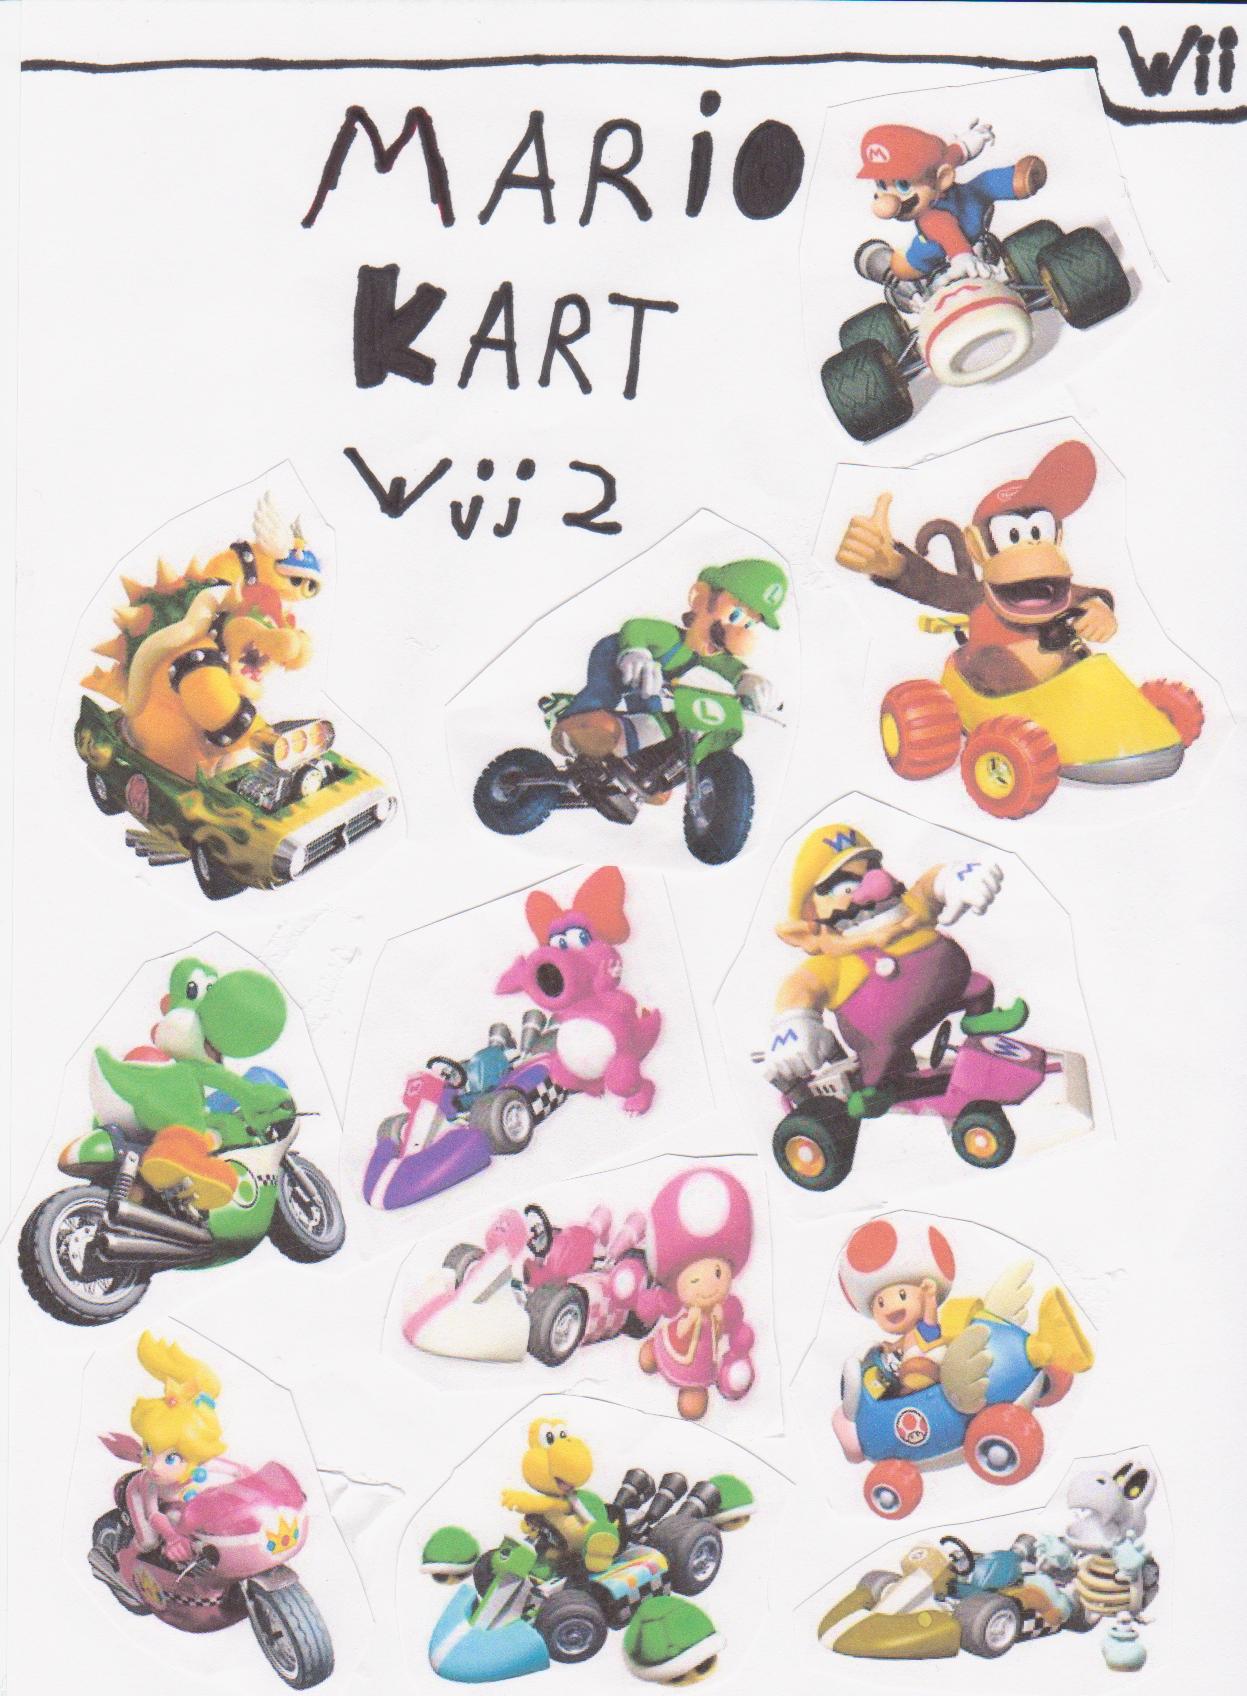 Image Mario Kart Wii 2 Fantendo Nintendo Fanon Wiki Fandom Powered By Wikia 6586